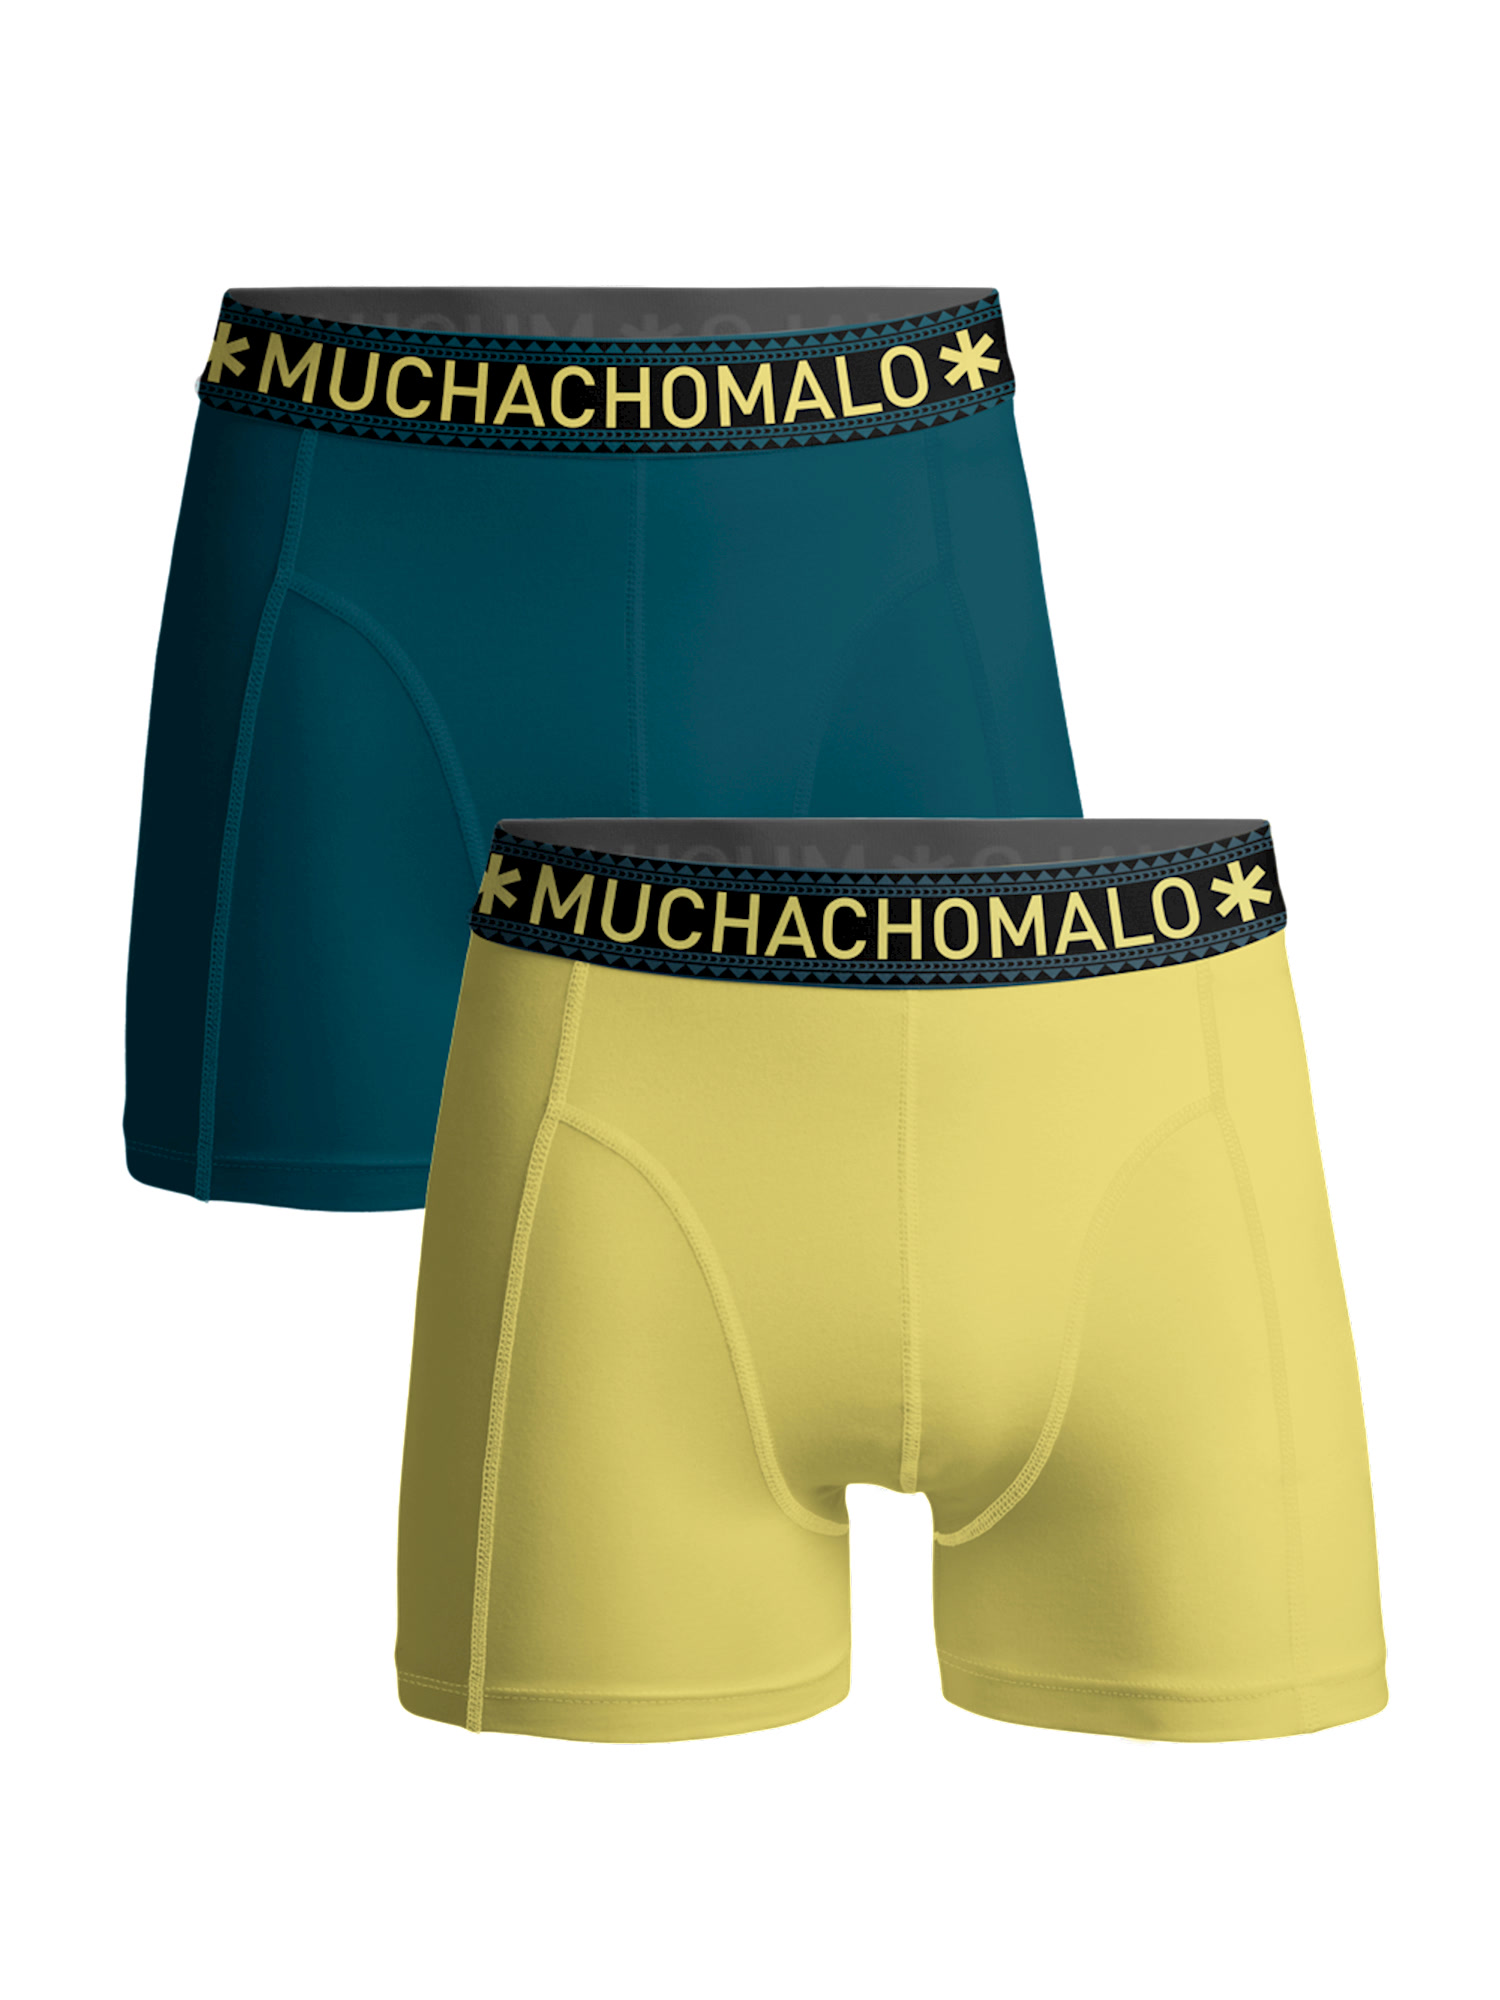 Боксеры Muchachomalo 2er-Set: Boxershorts, цвет Yellow/Blue боксеры muchachomalo 6er set boxershorts цвет black blue blue pink orange yellow